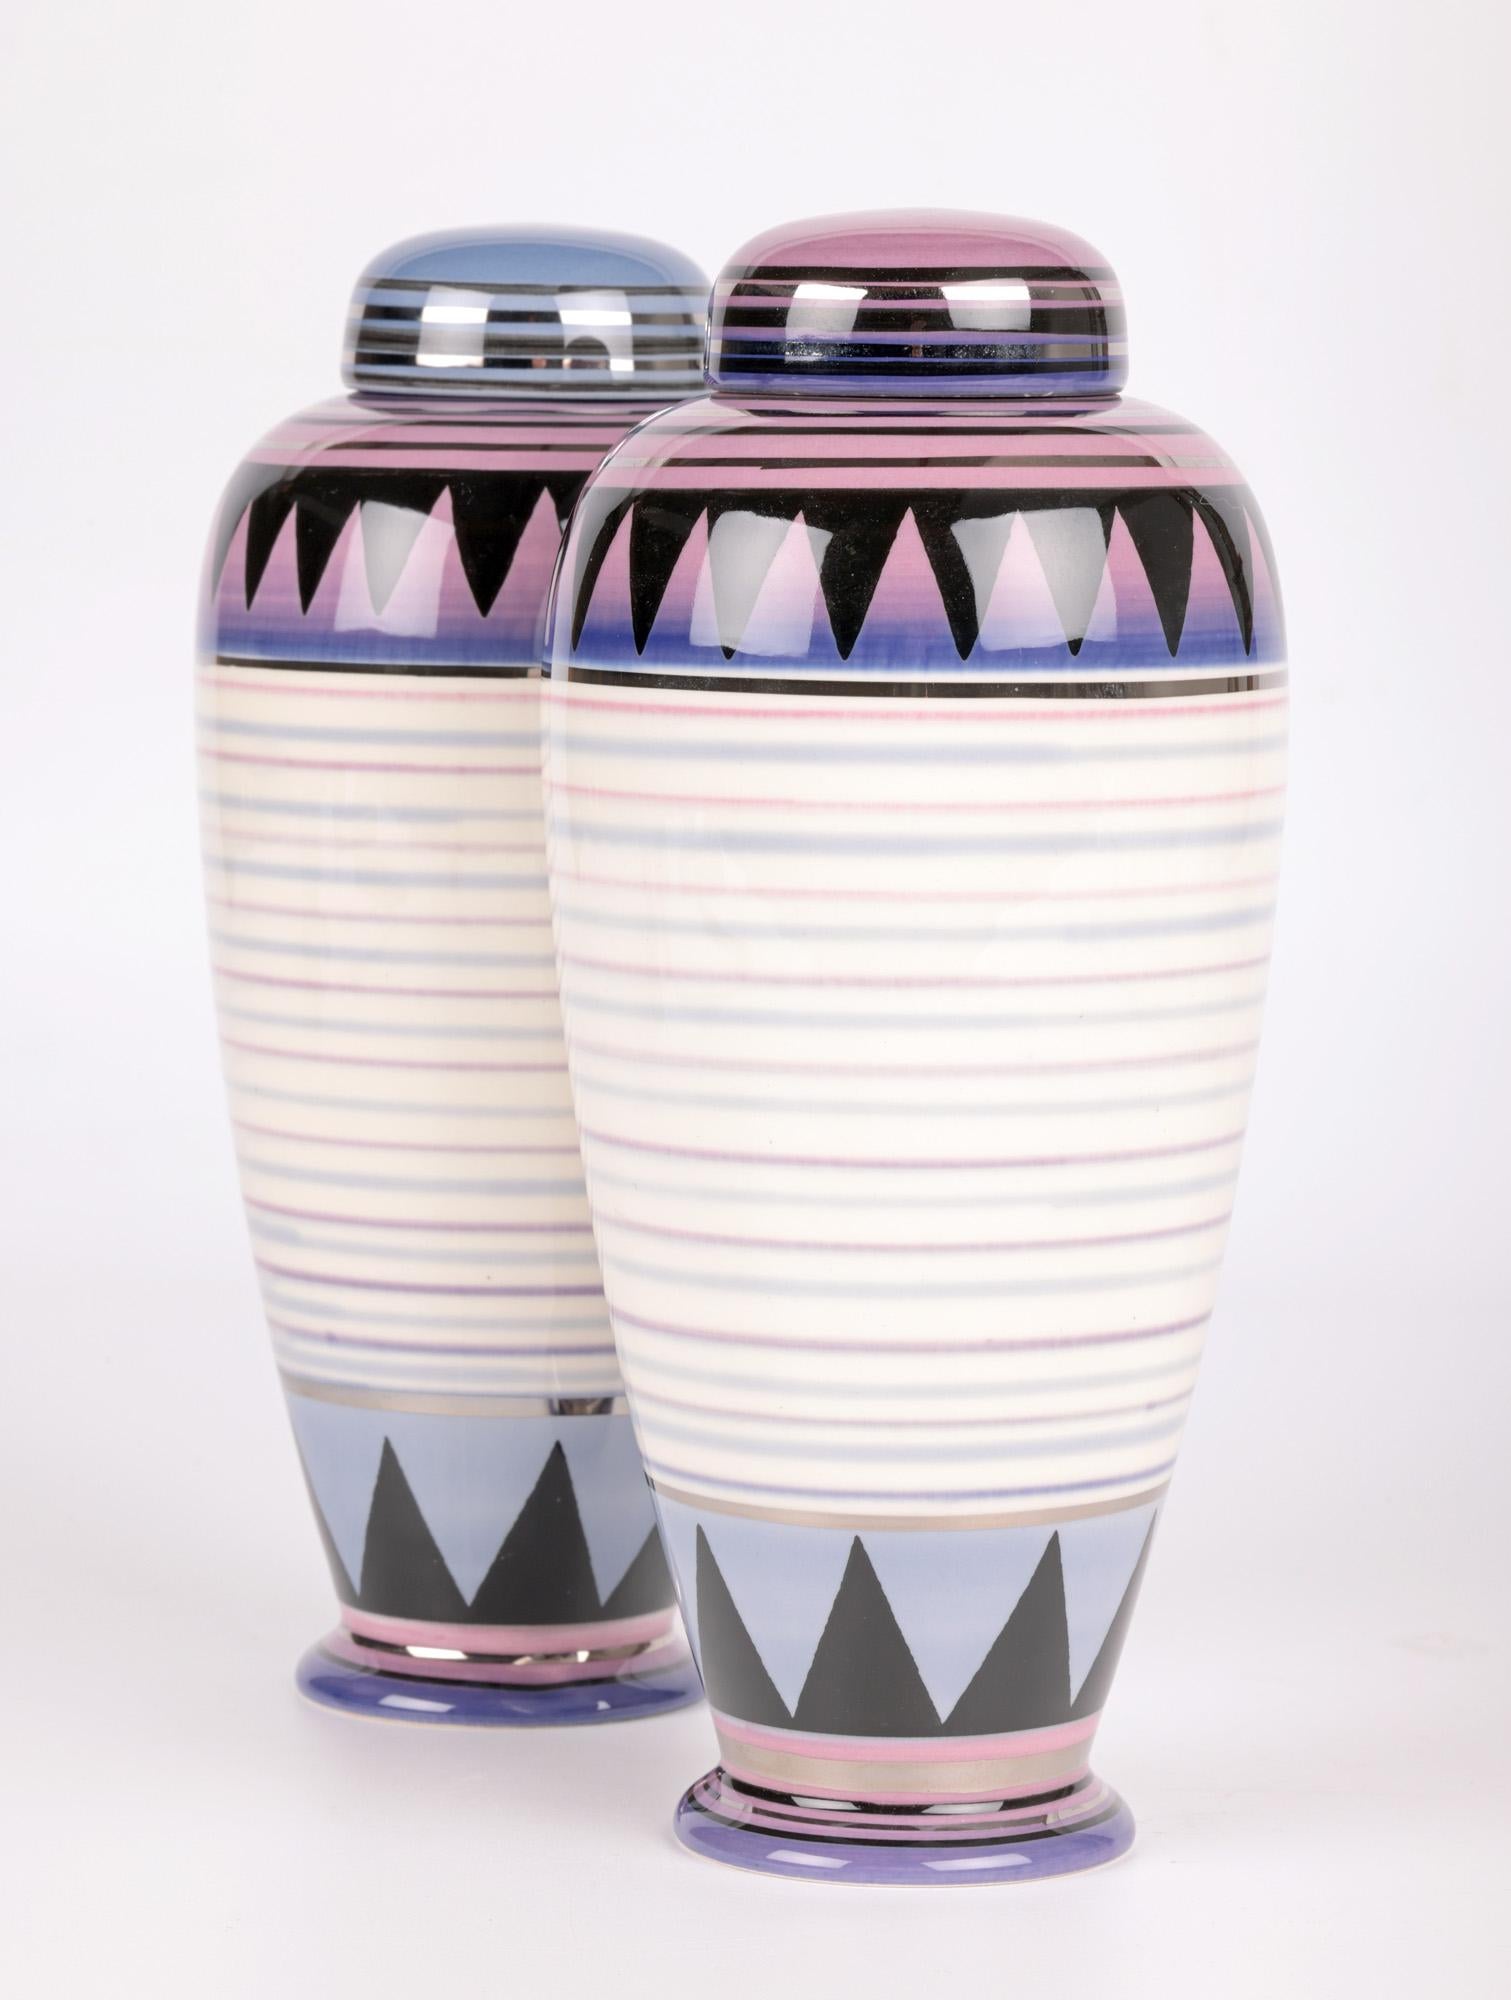 Moorland Pottery Pair Ceramic Lustre Lidded Vases   For Sale 8